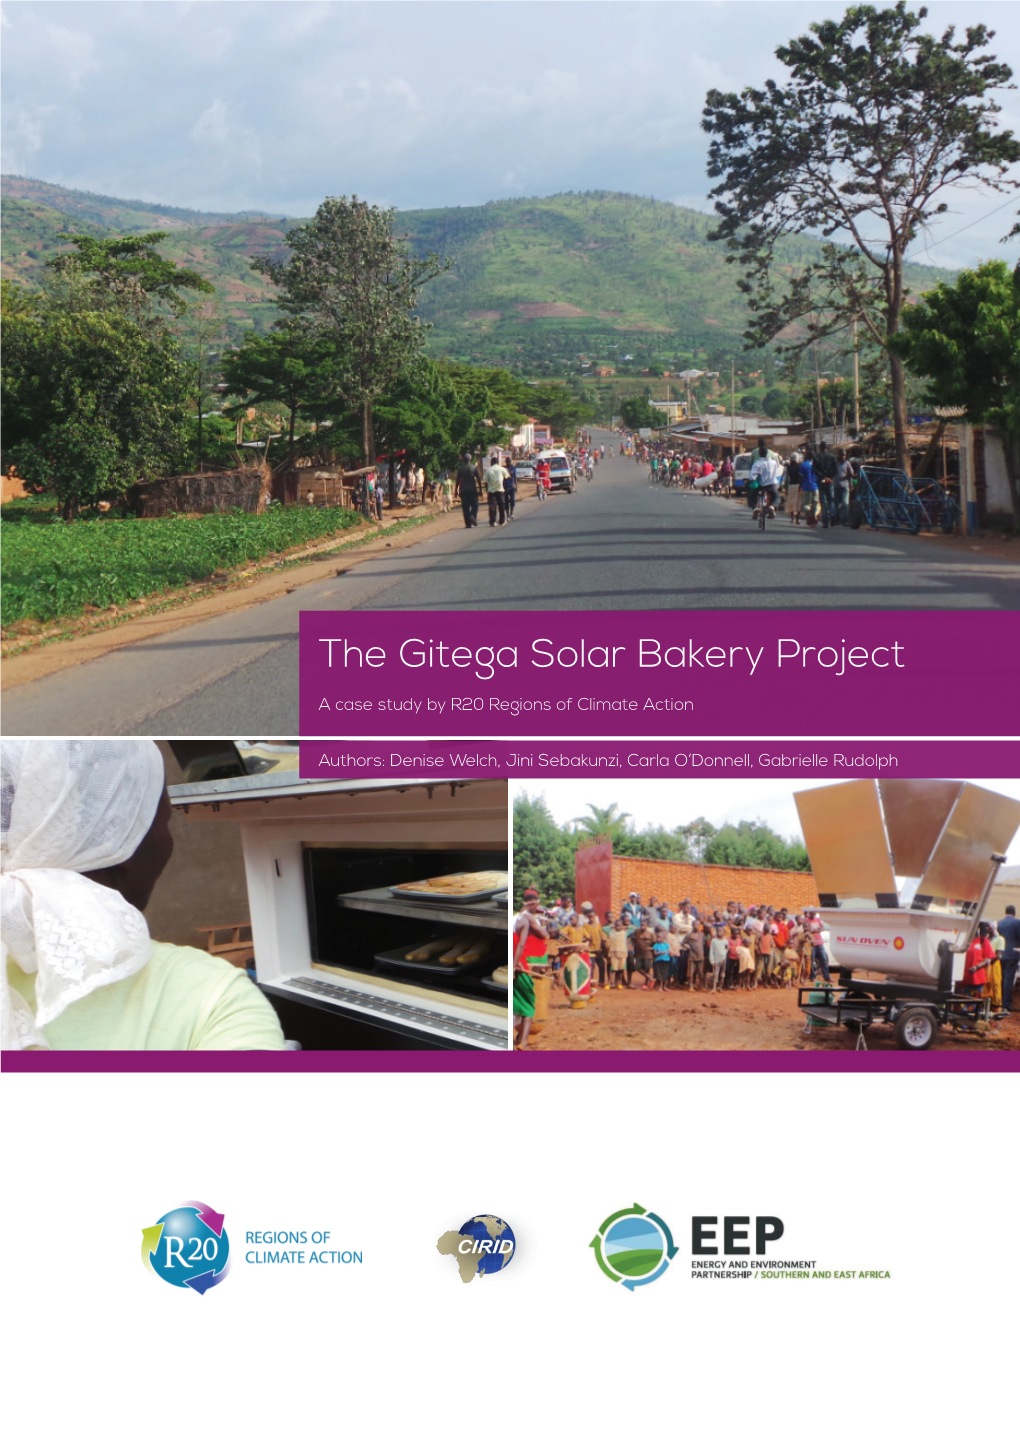 The Gitega Solar Bakery Project